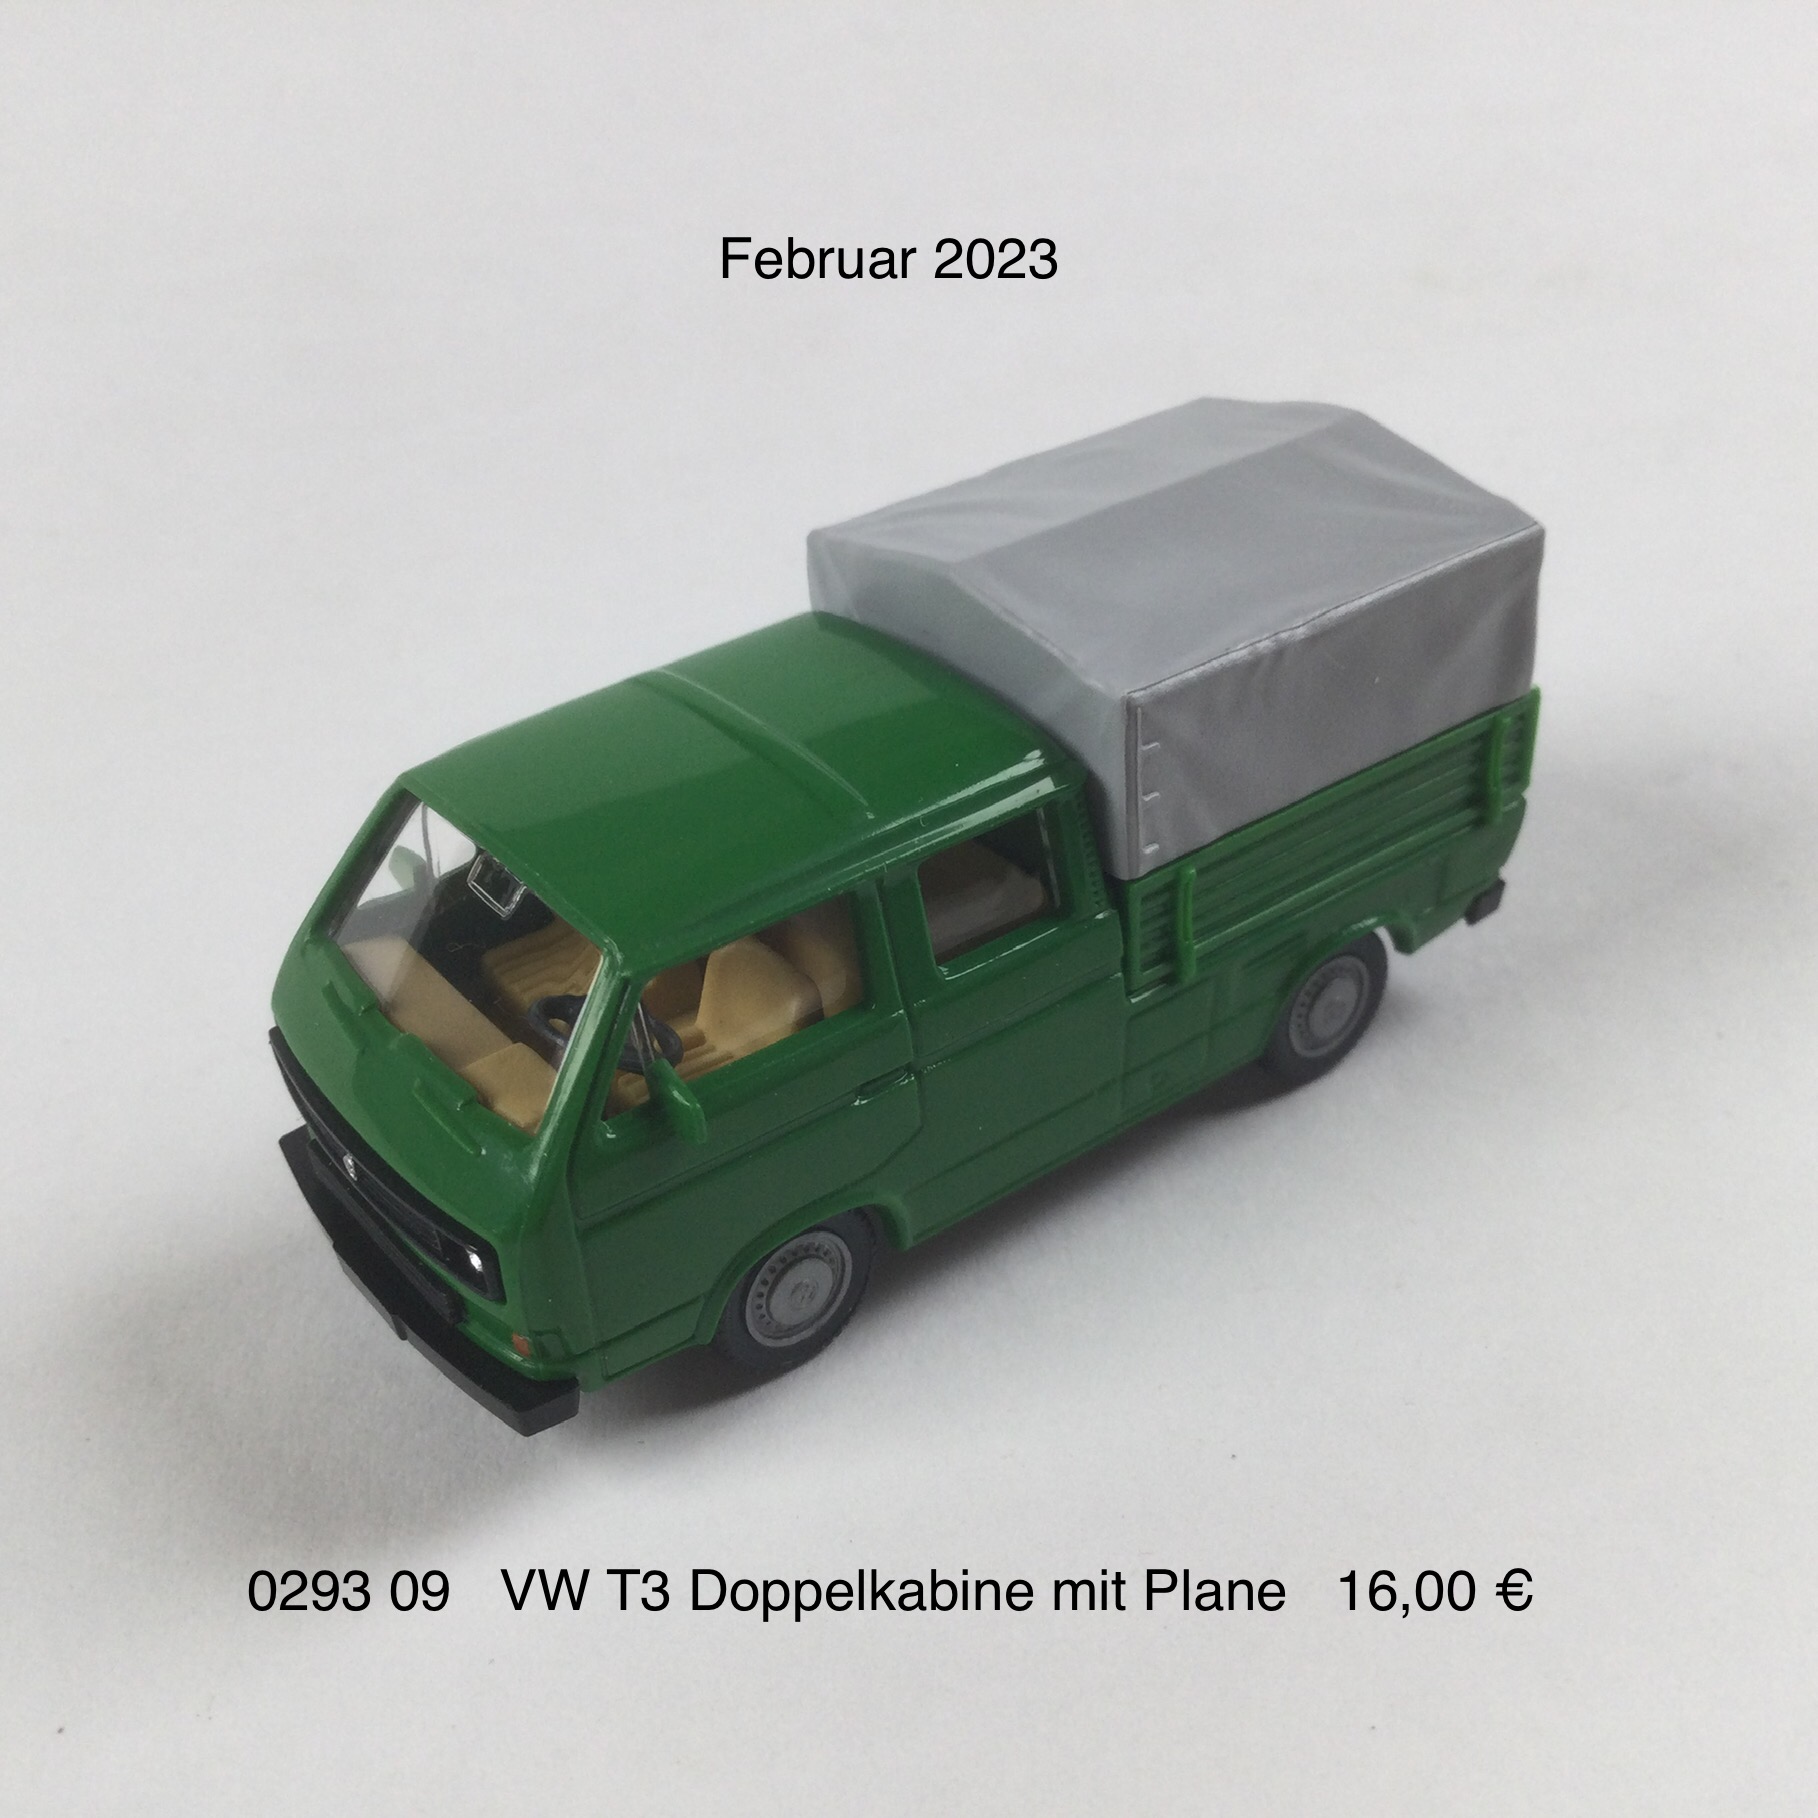 VW T3 Doppelkabine mit Plane "grasgrün"